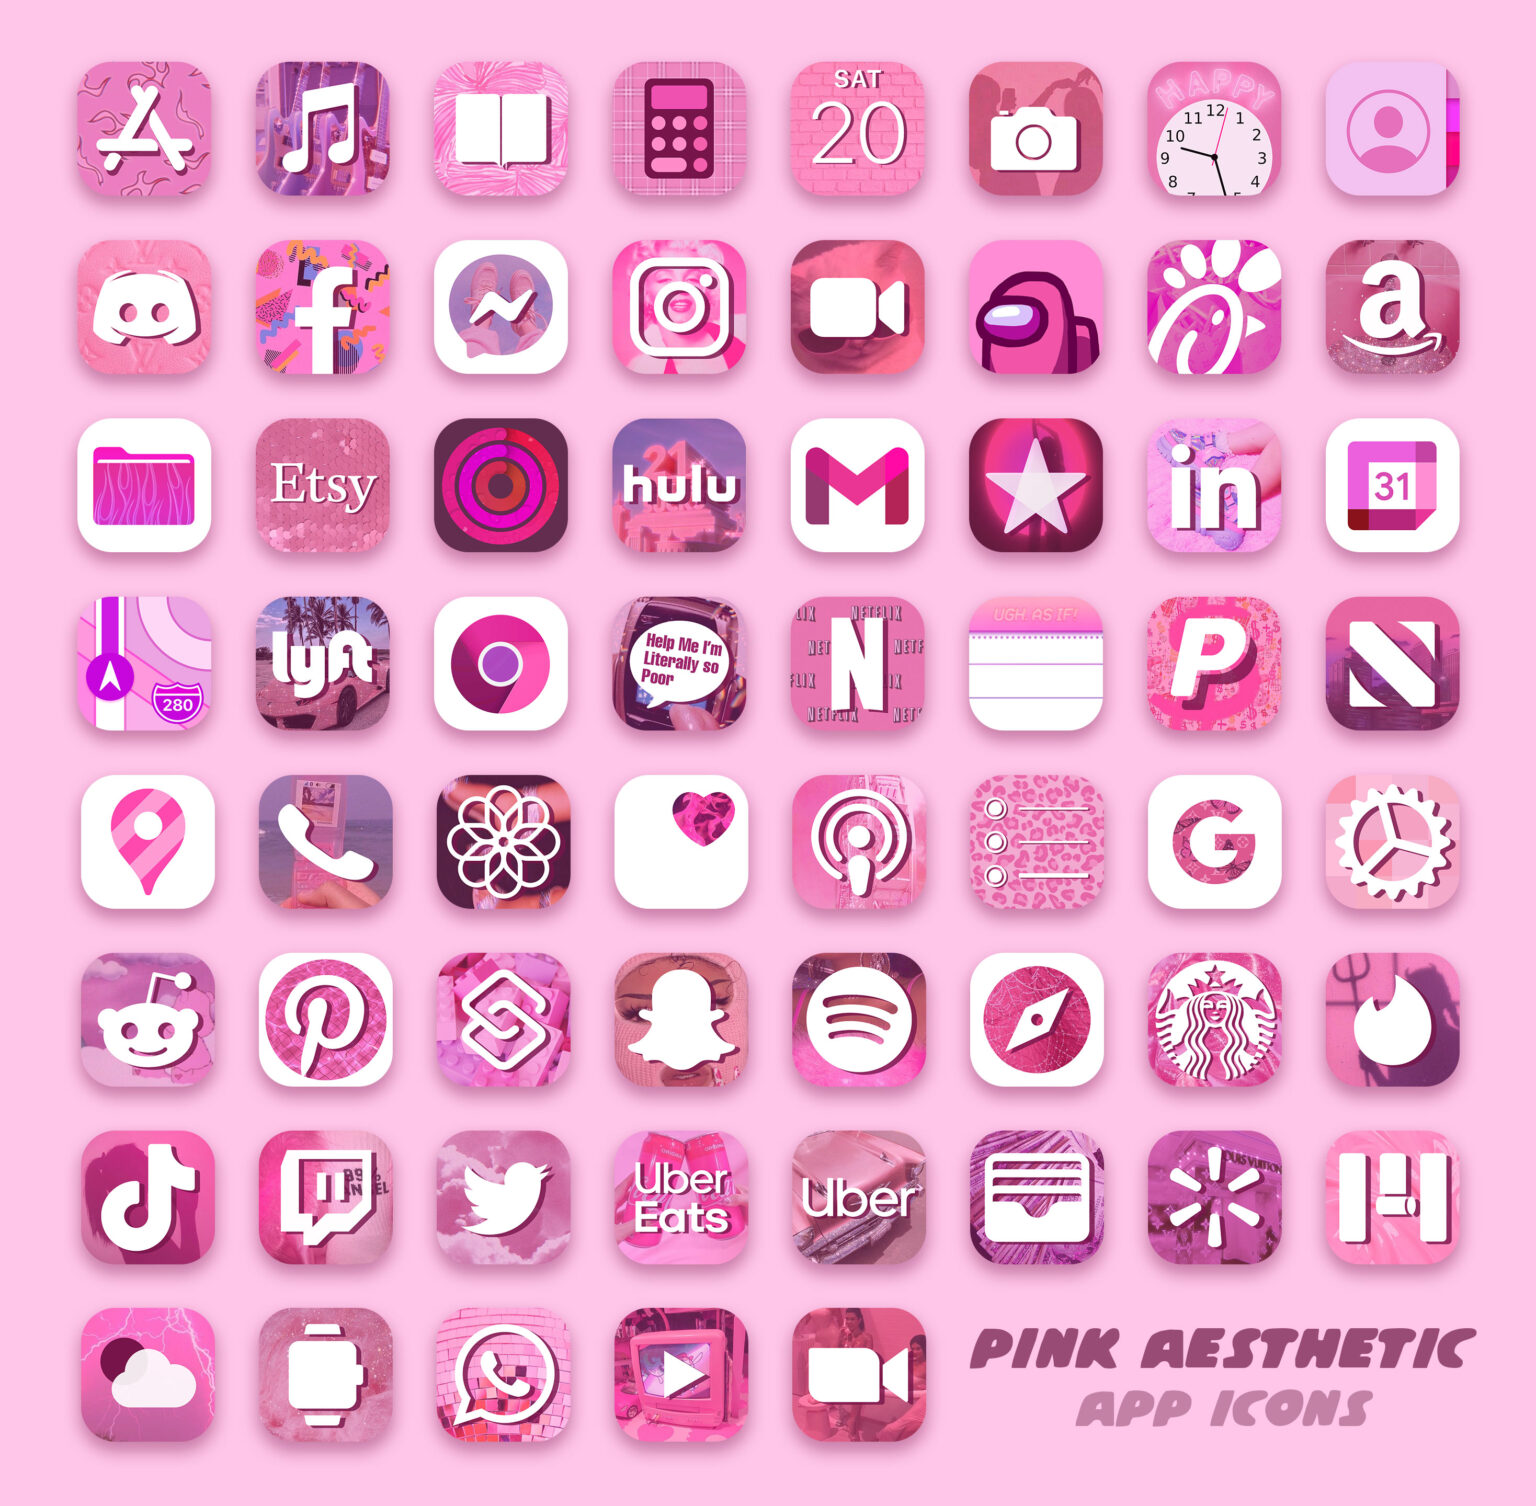 tumblr icons pink